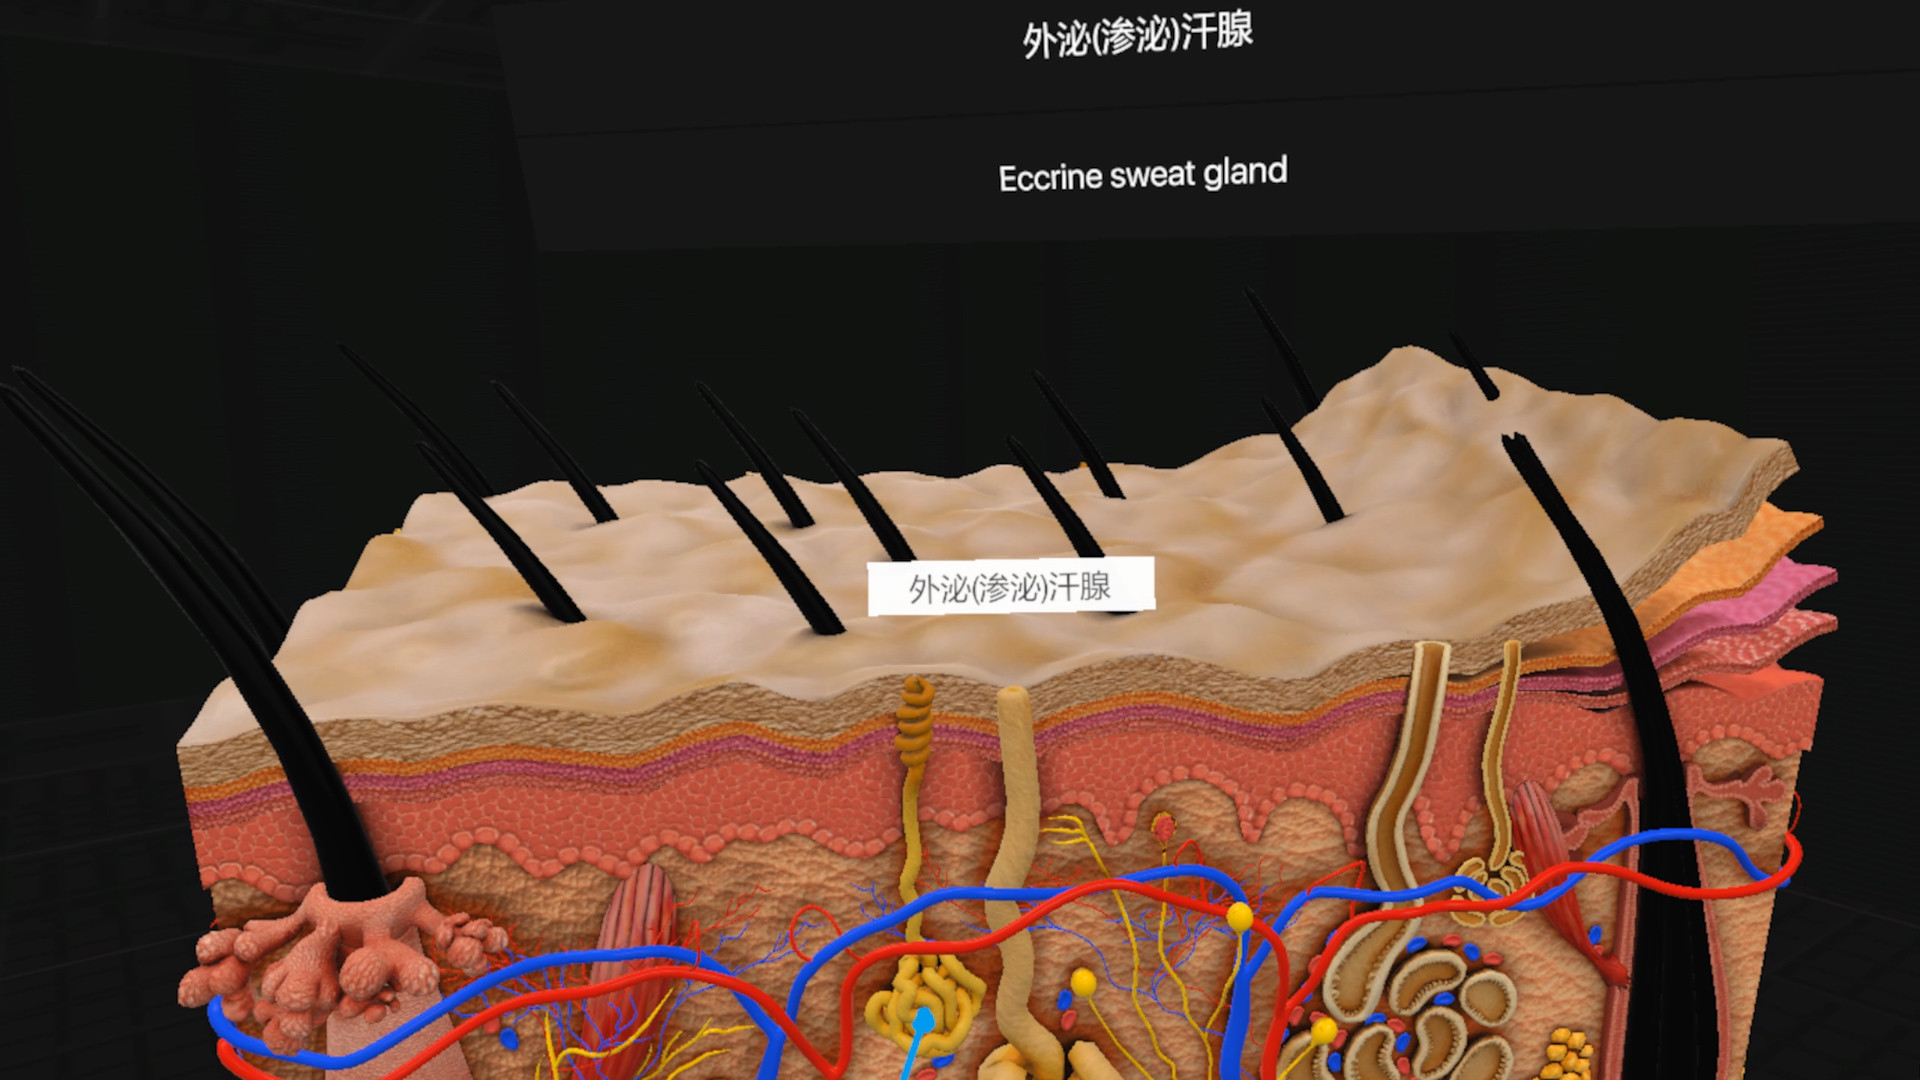 日常解剖 VR (Everyday Anatomy VR)